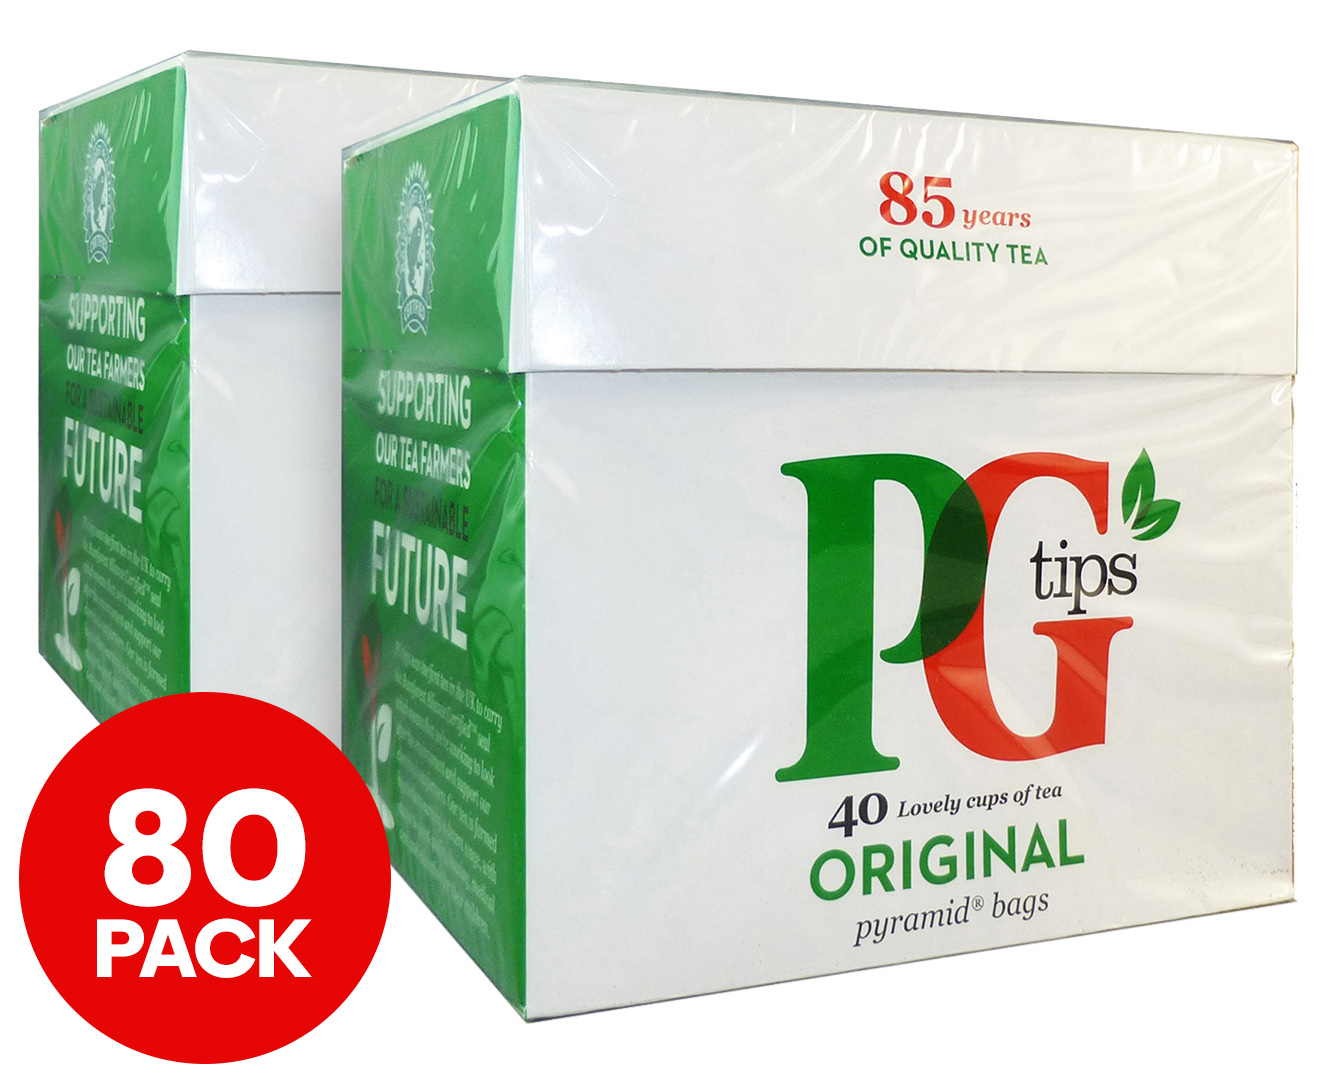 PG Tips Black Tea, Pyramid Tea Bags, 40 ct, 2 pk 